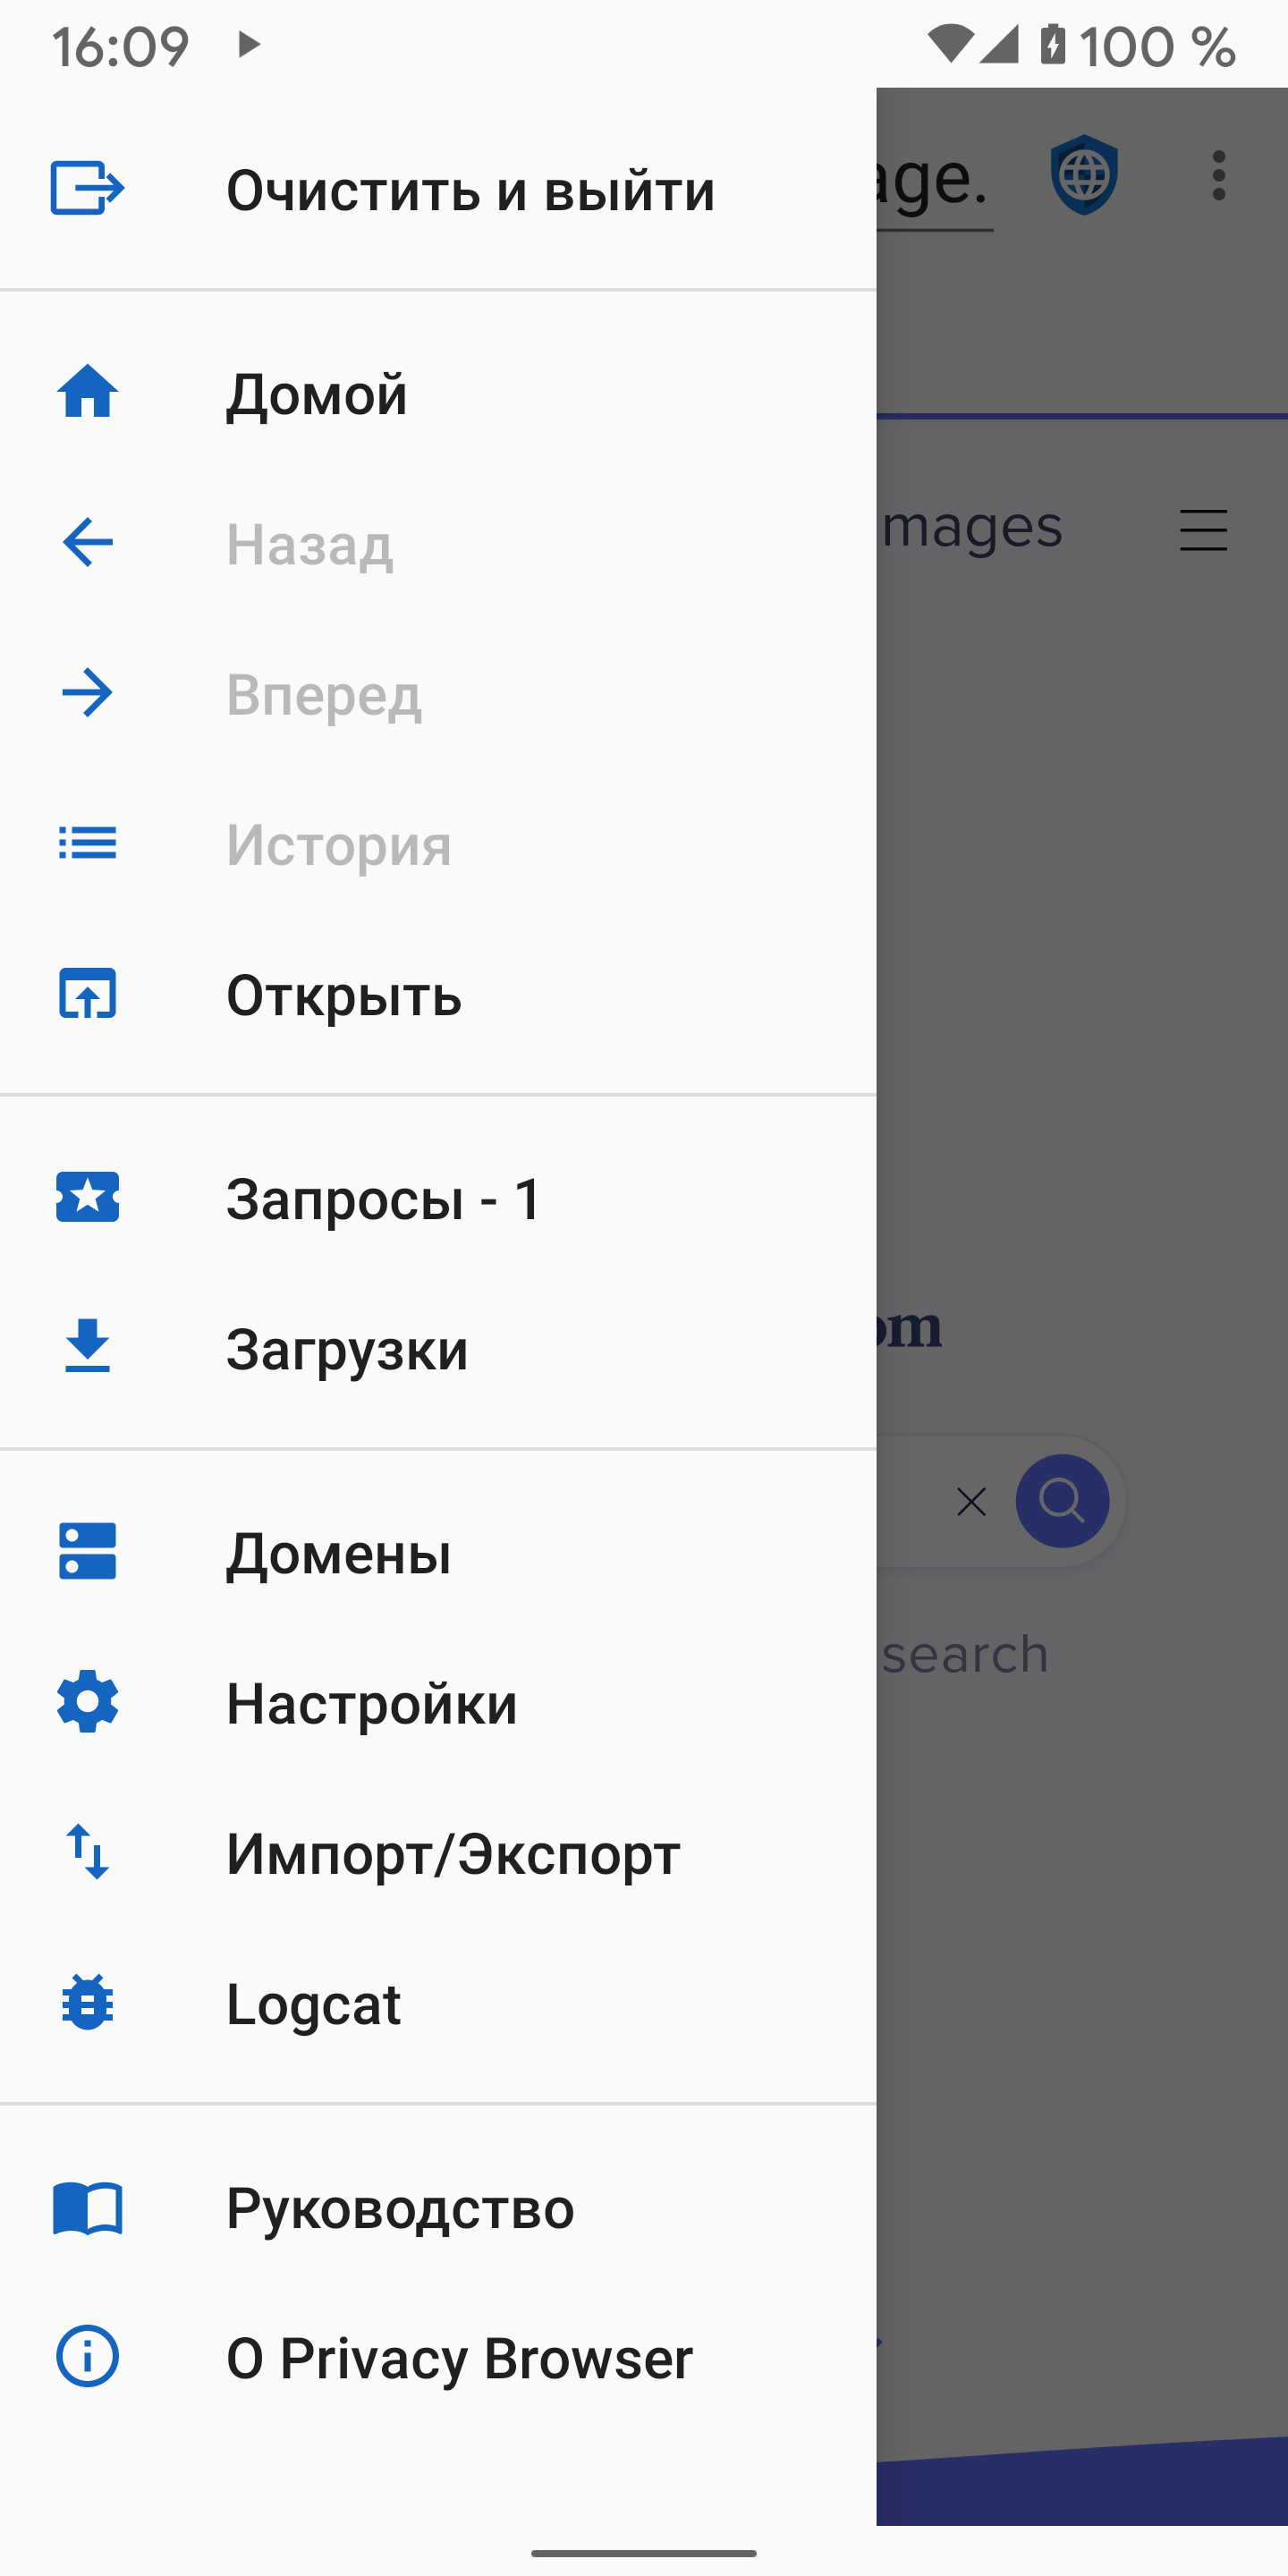 fastlane/metadata/android/ru-RU/images/phoneScreenshots/02-NavigationMenu.png